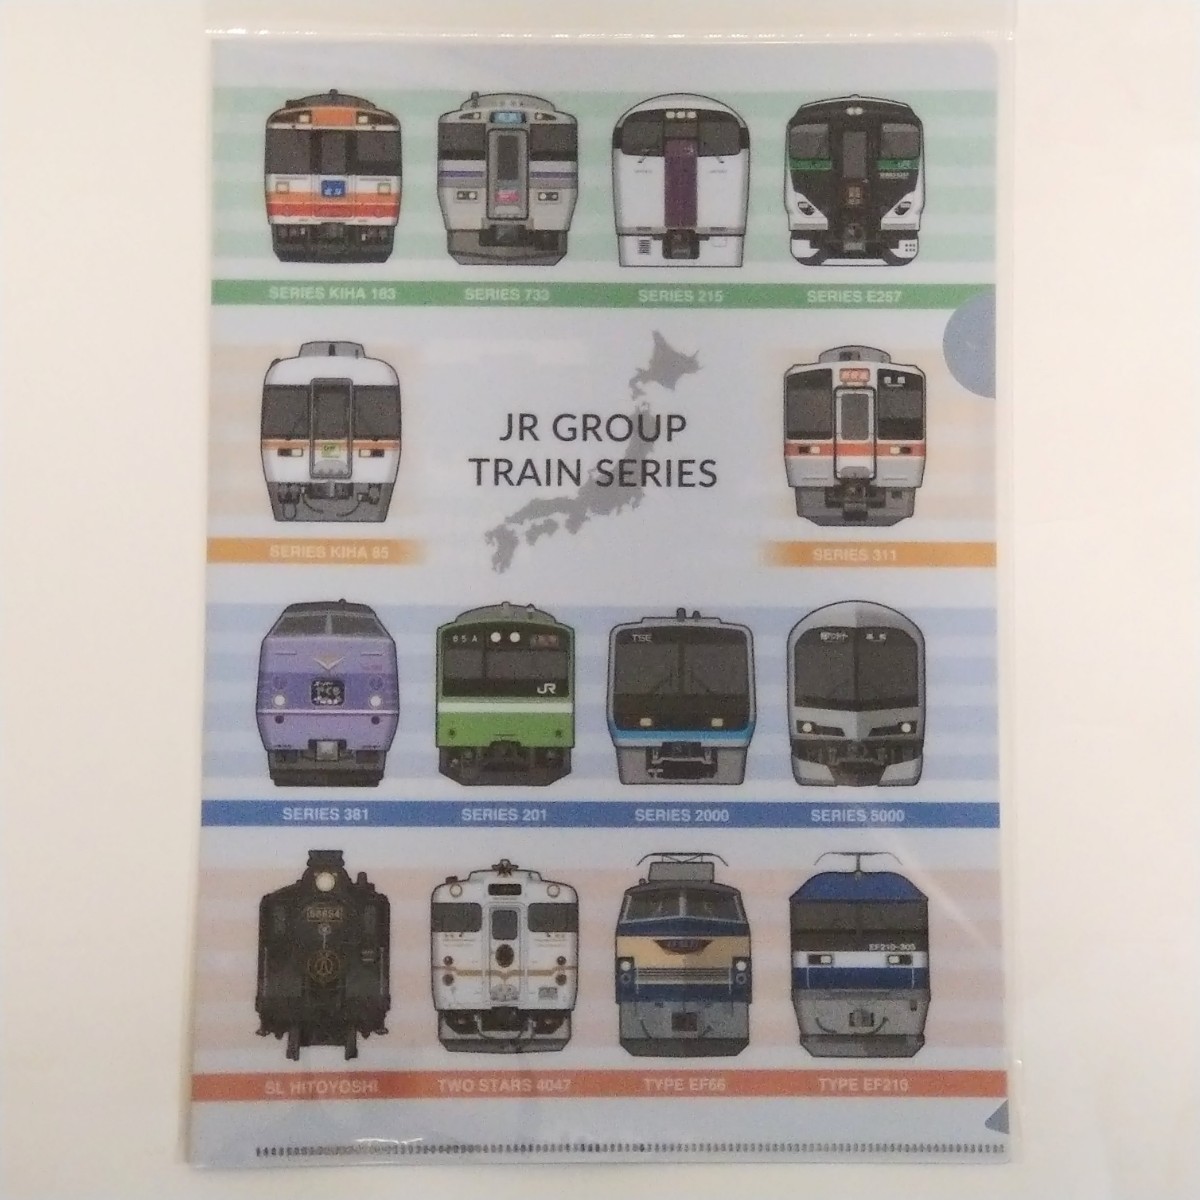 JRグループトレインシリーズクリアファイル【新品】鉄道の日 EF66形電気機関車 キハ85系 E257系 201系電車 JR GROUP TRAIN SERIES A4サイズ_画像1